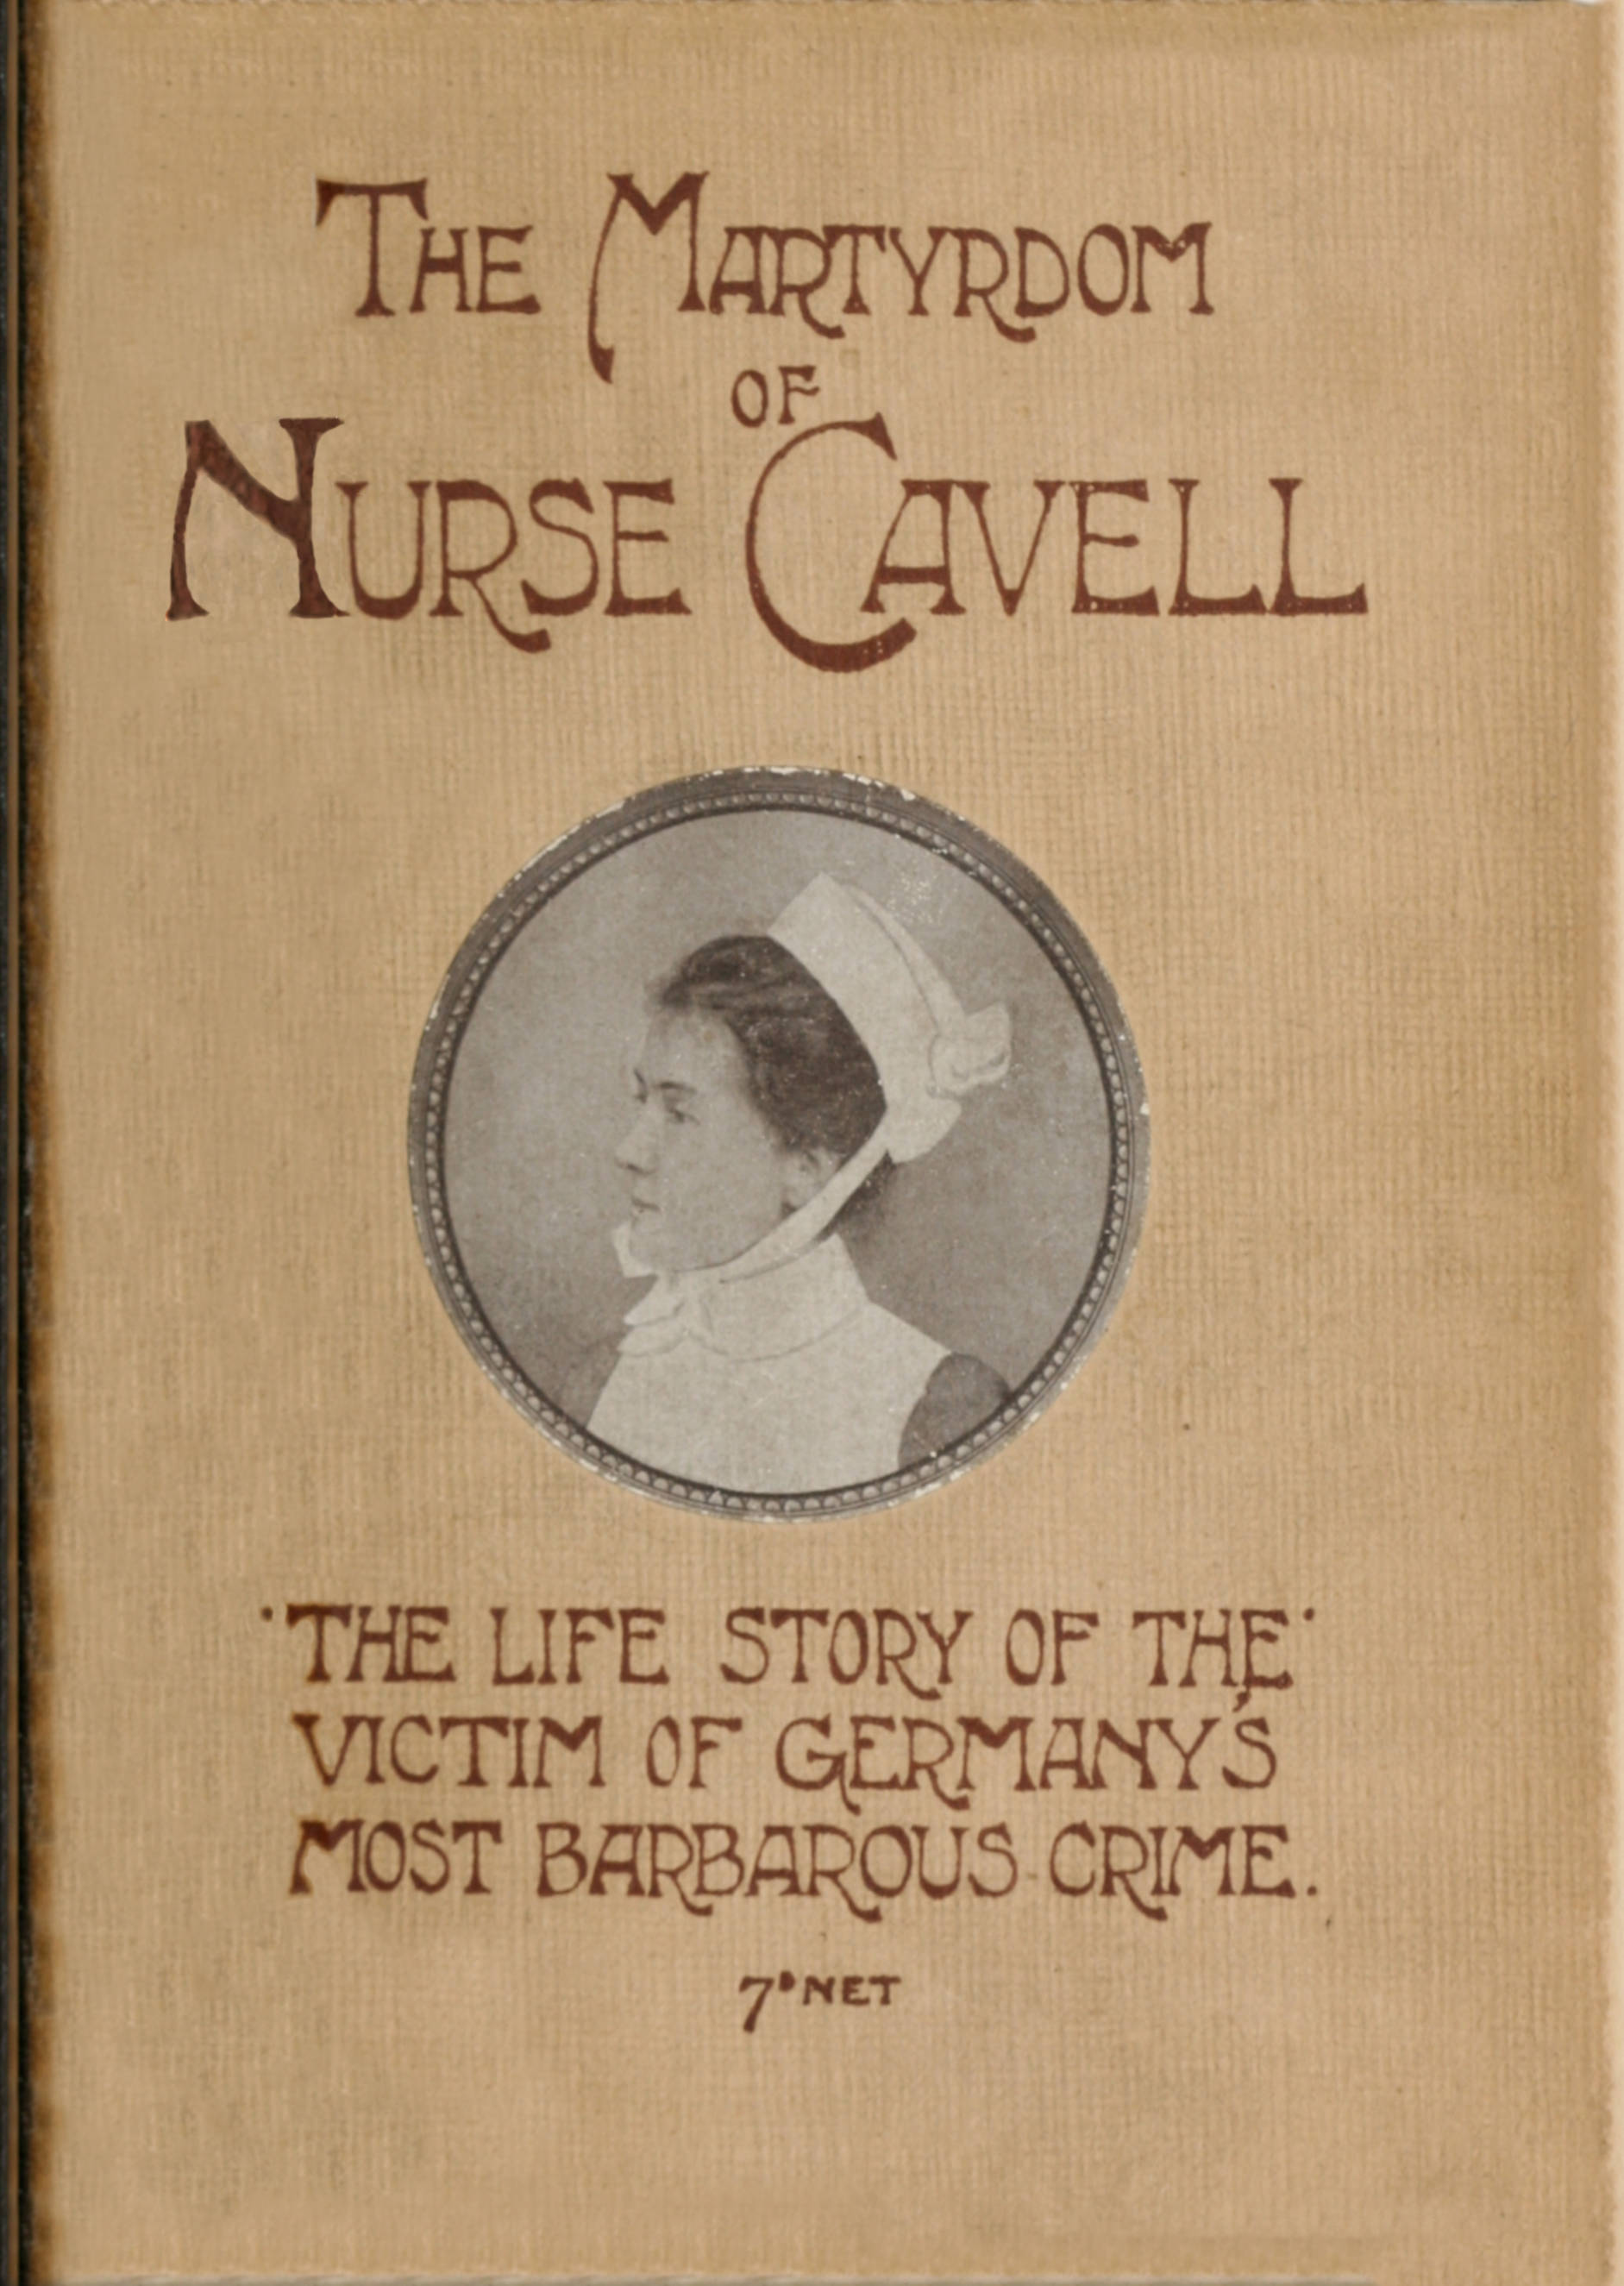 The latest portrait of Nurse Cavell.